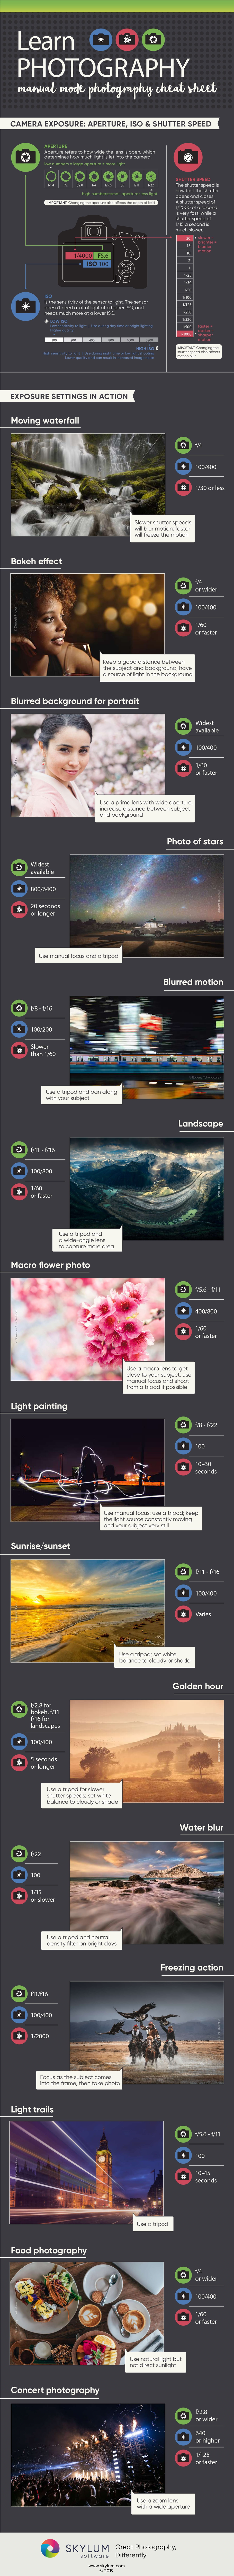 Photography Cheat Sheet: Manual Mode Camera Settings (Infographic) Image1